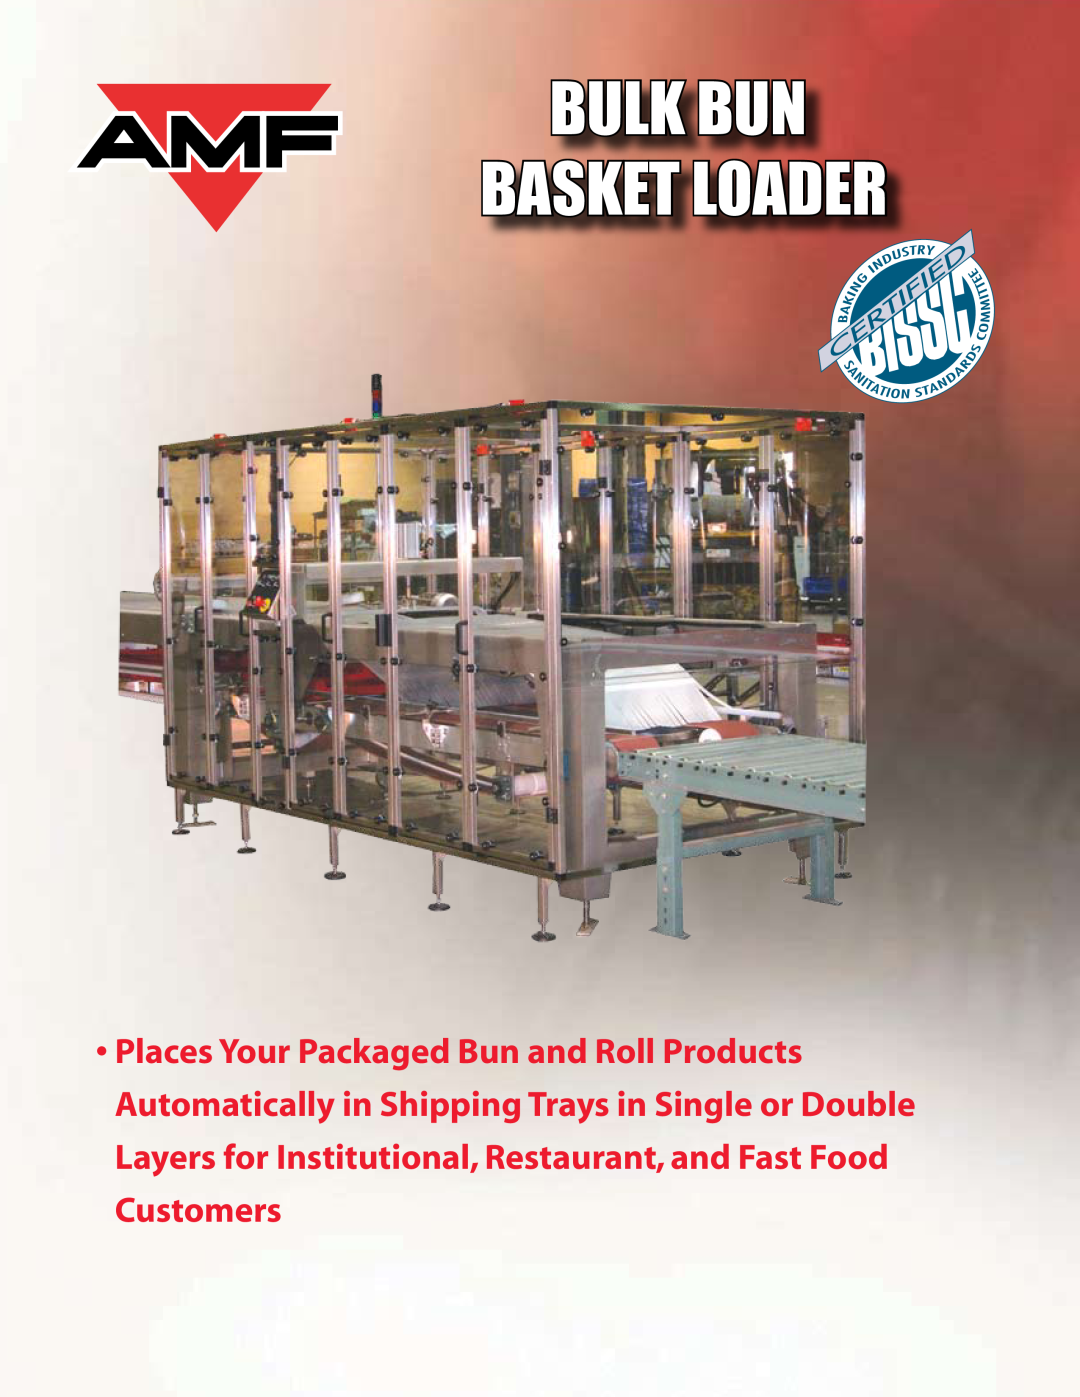 AMF Bulk Bun Basket Loader manual 